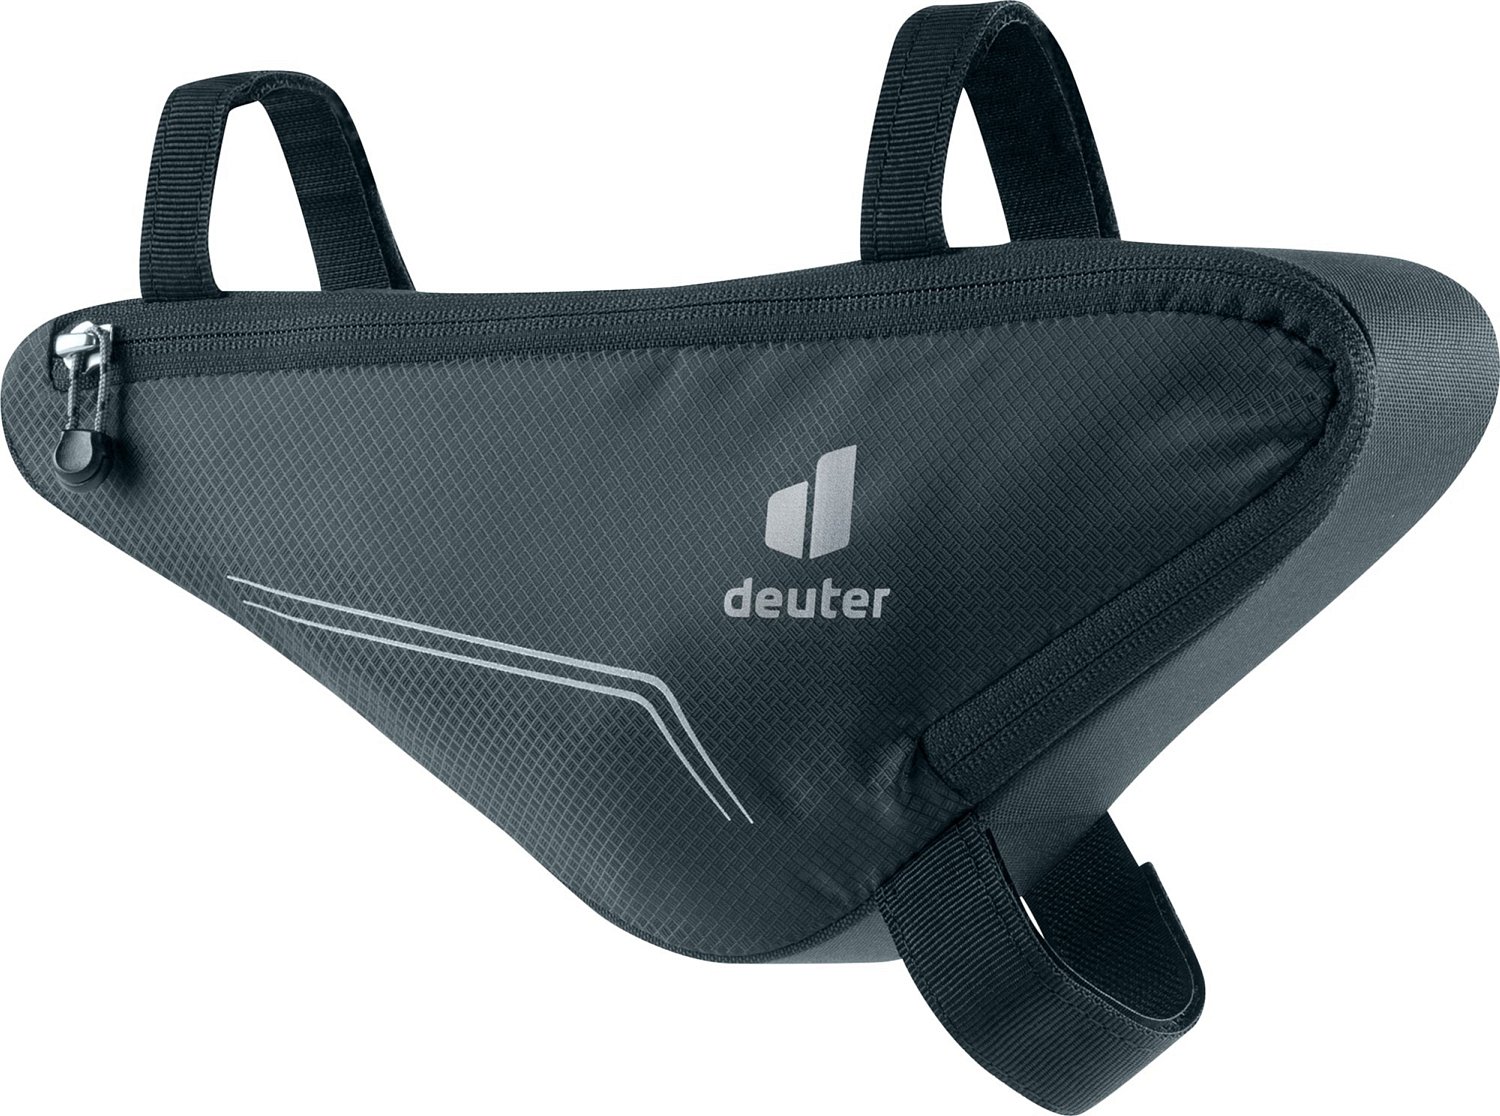 Велосумка Deuter Front Triangle Bag, 1.3 л, под раму, Black, 2021, 3290521_7000 велосумка deuter energy bag 0 5 л на раму black 2021 3290221 7000